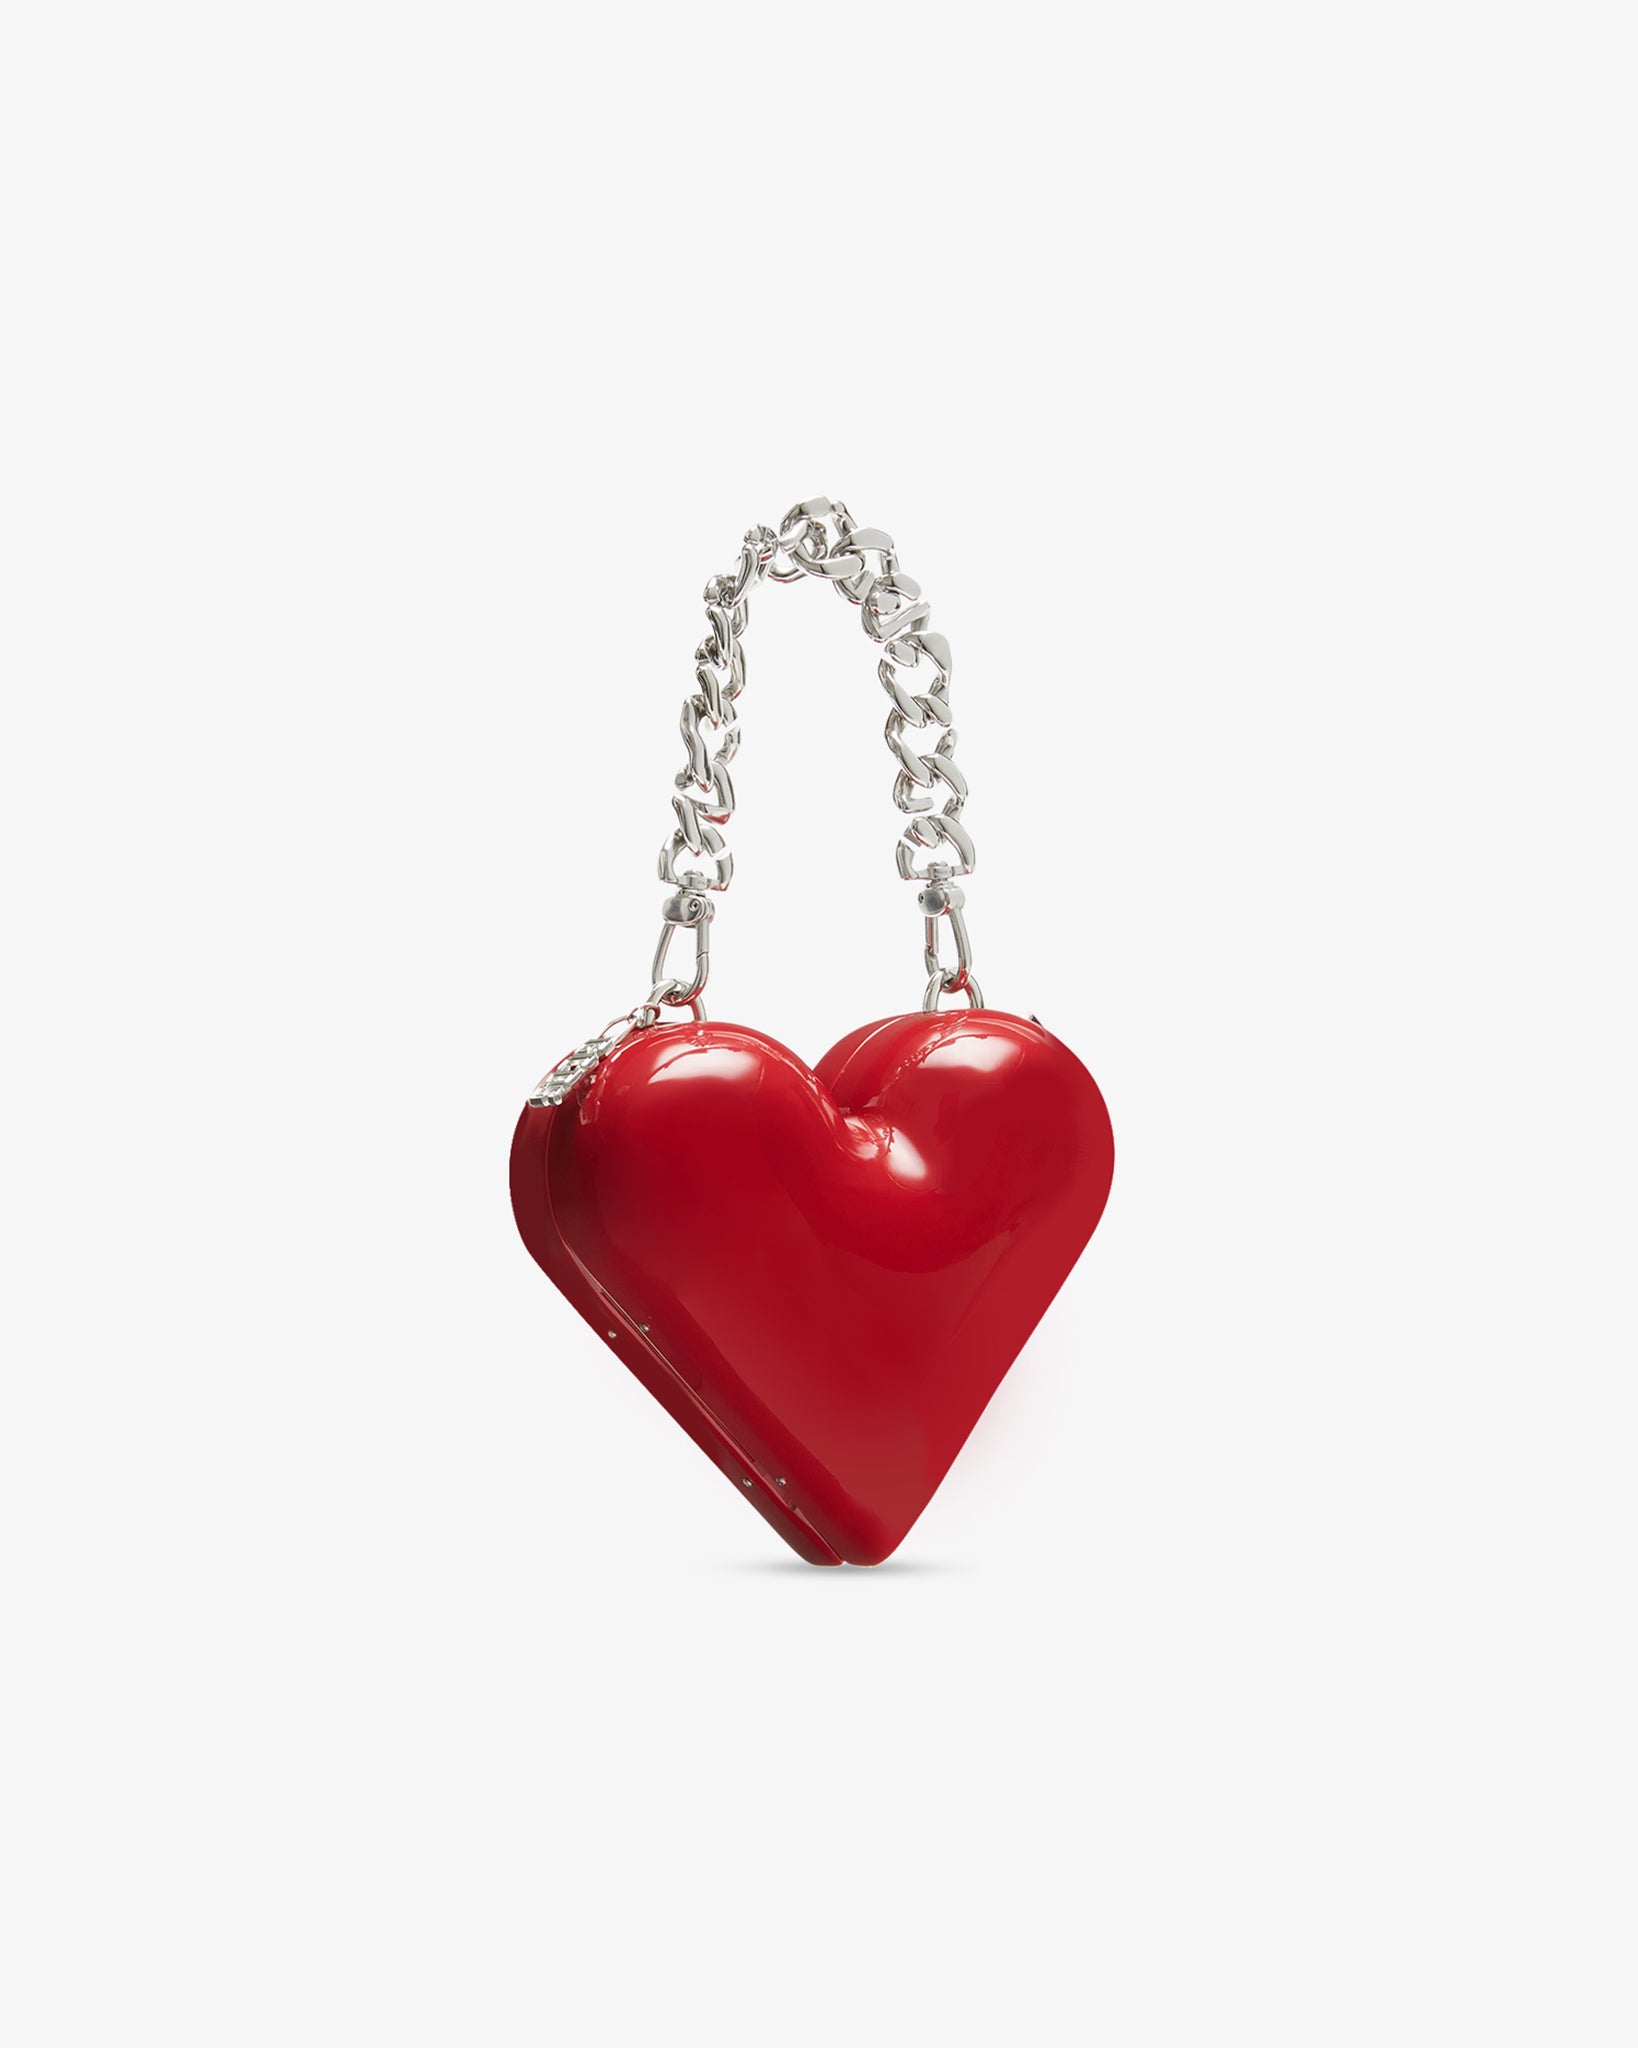 Heart Bag : Women Bags Red